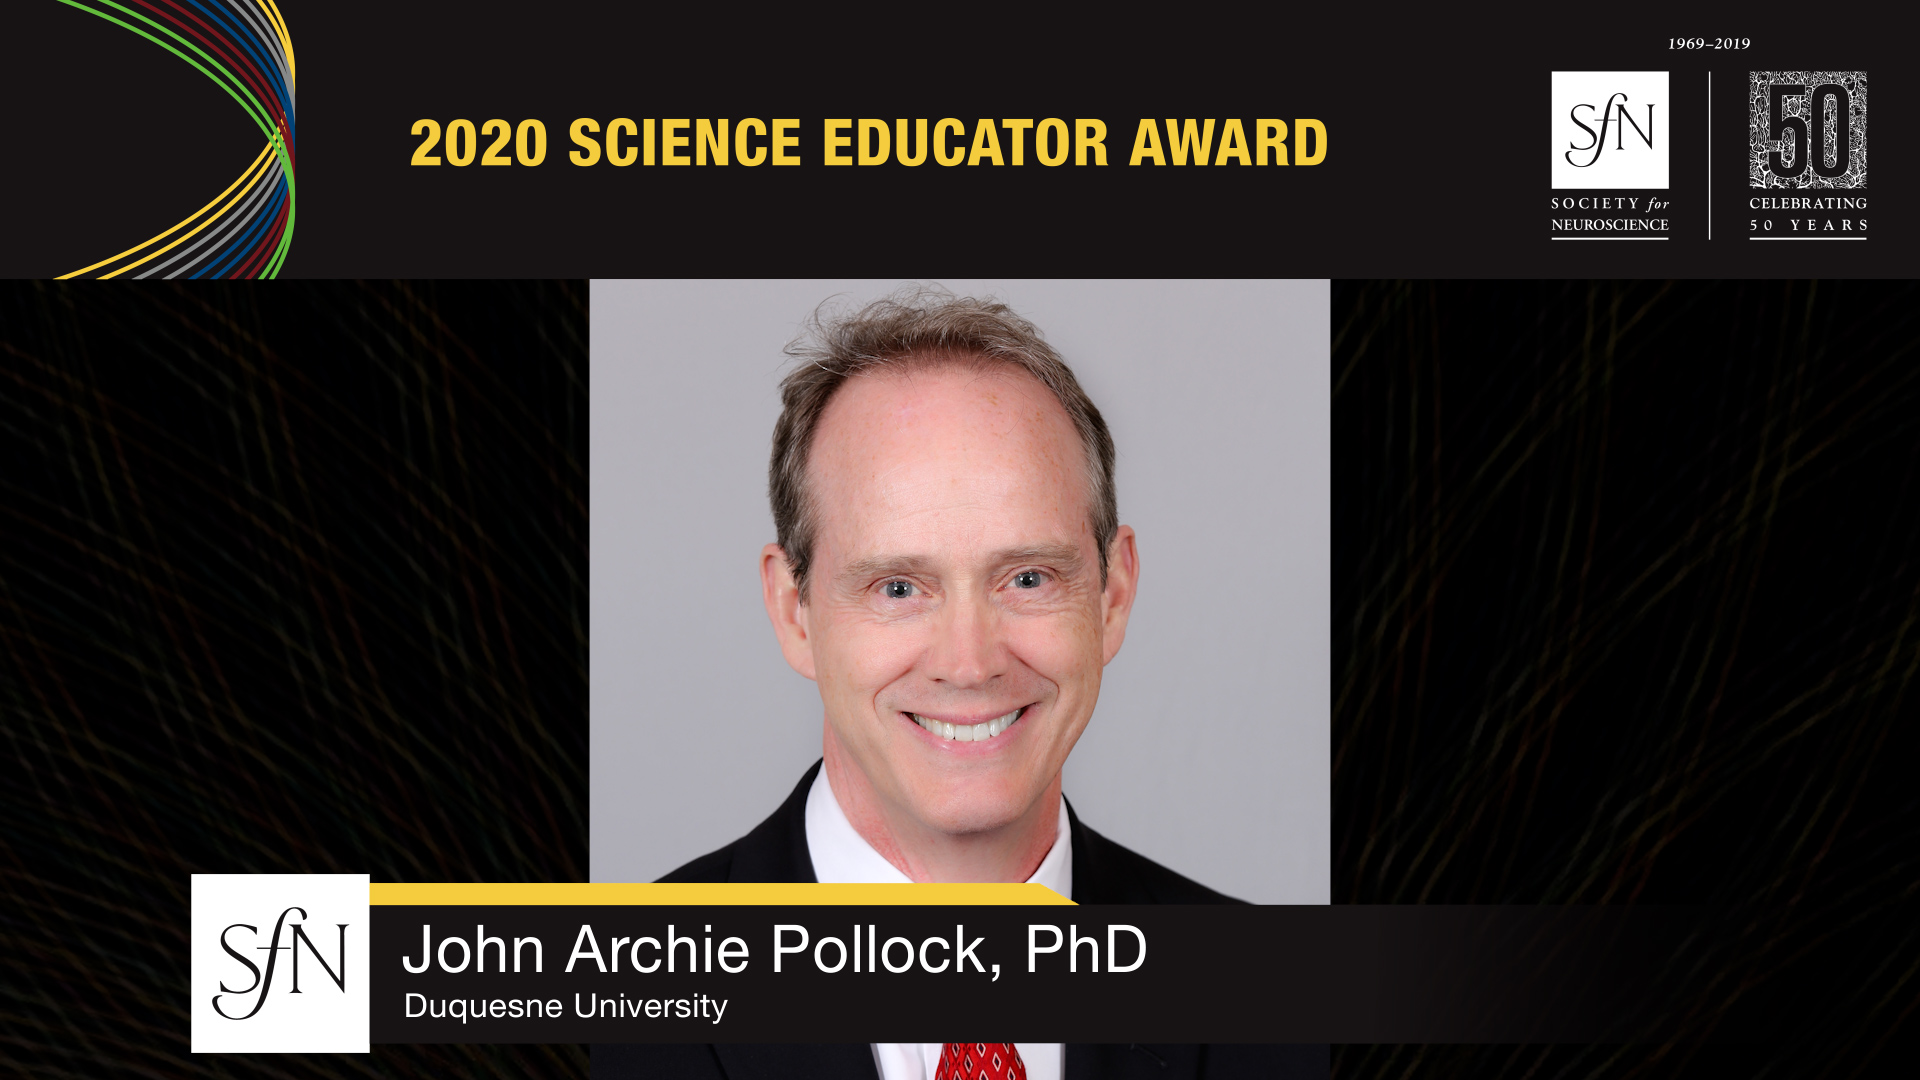 2020 Science Educator Award winner graphic, image of John Archie Pollock, PhD Duquesne University